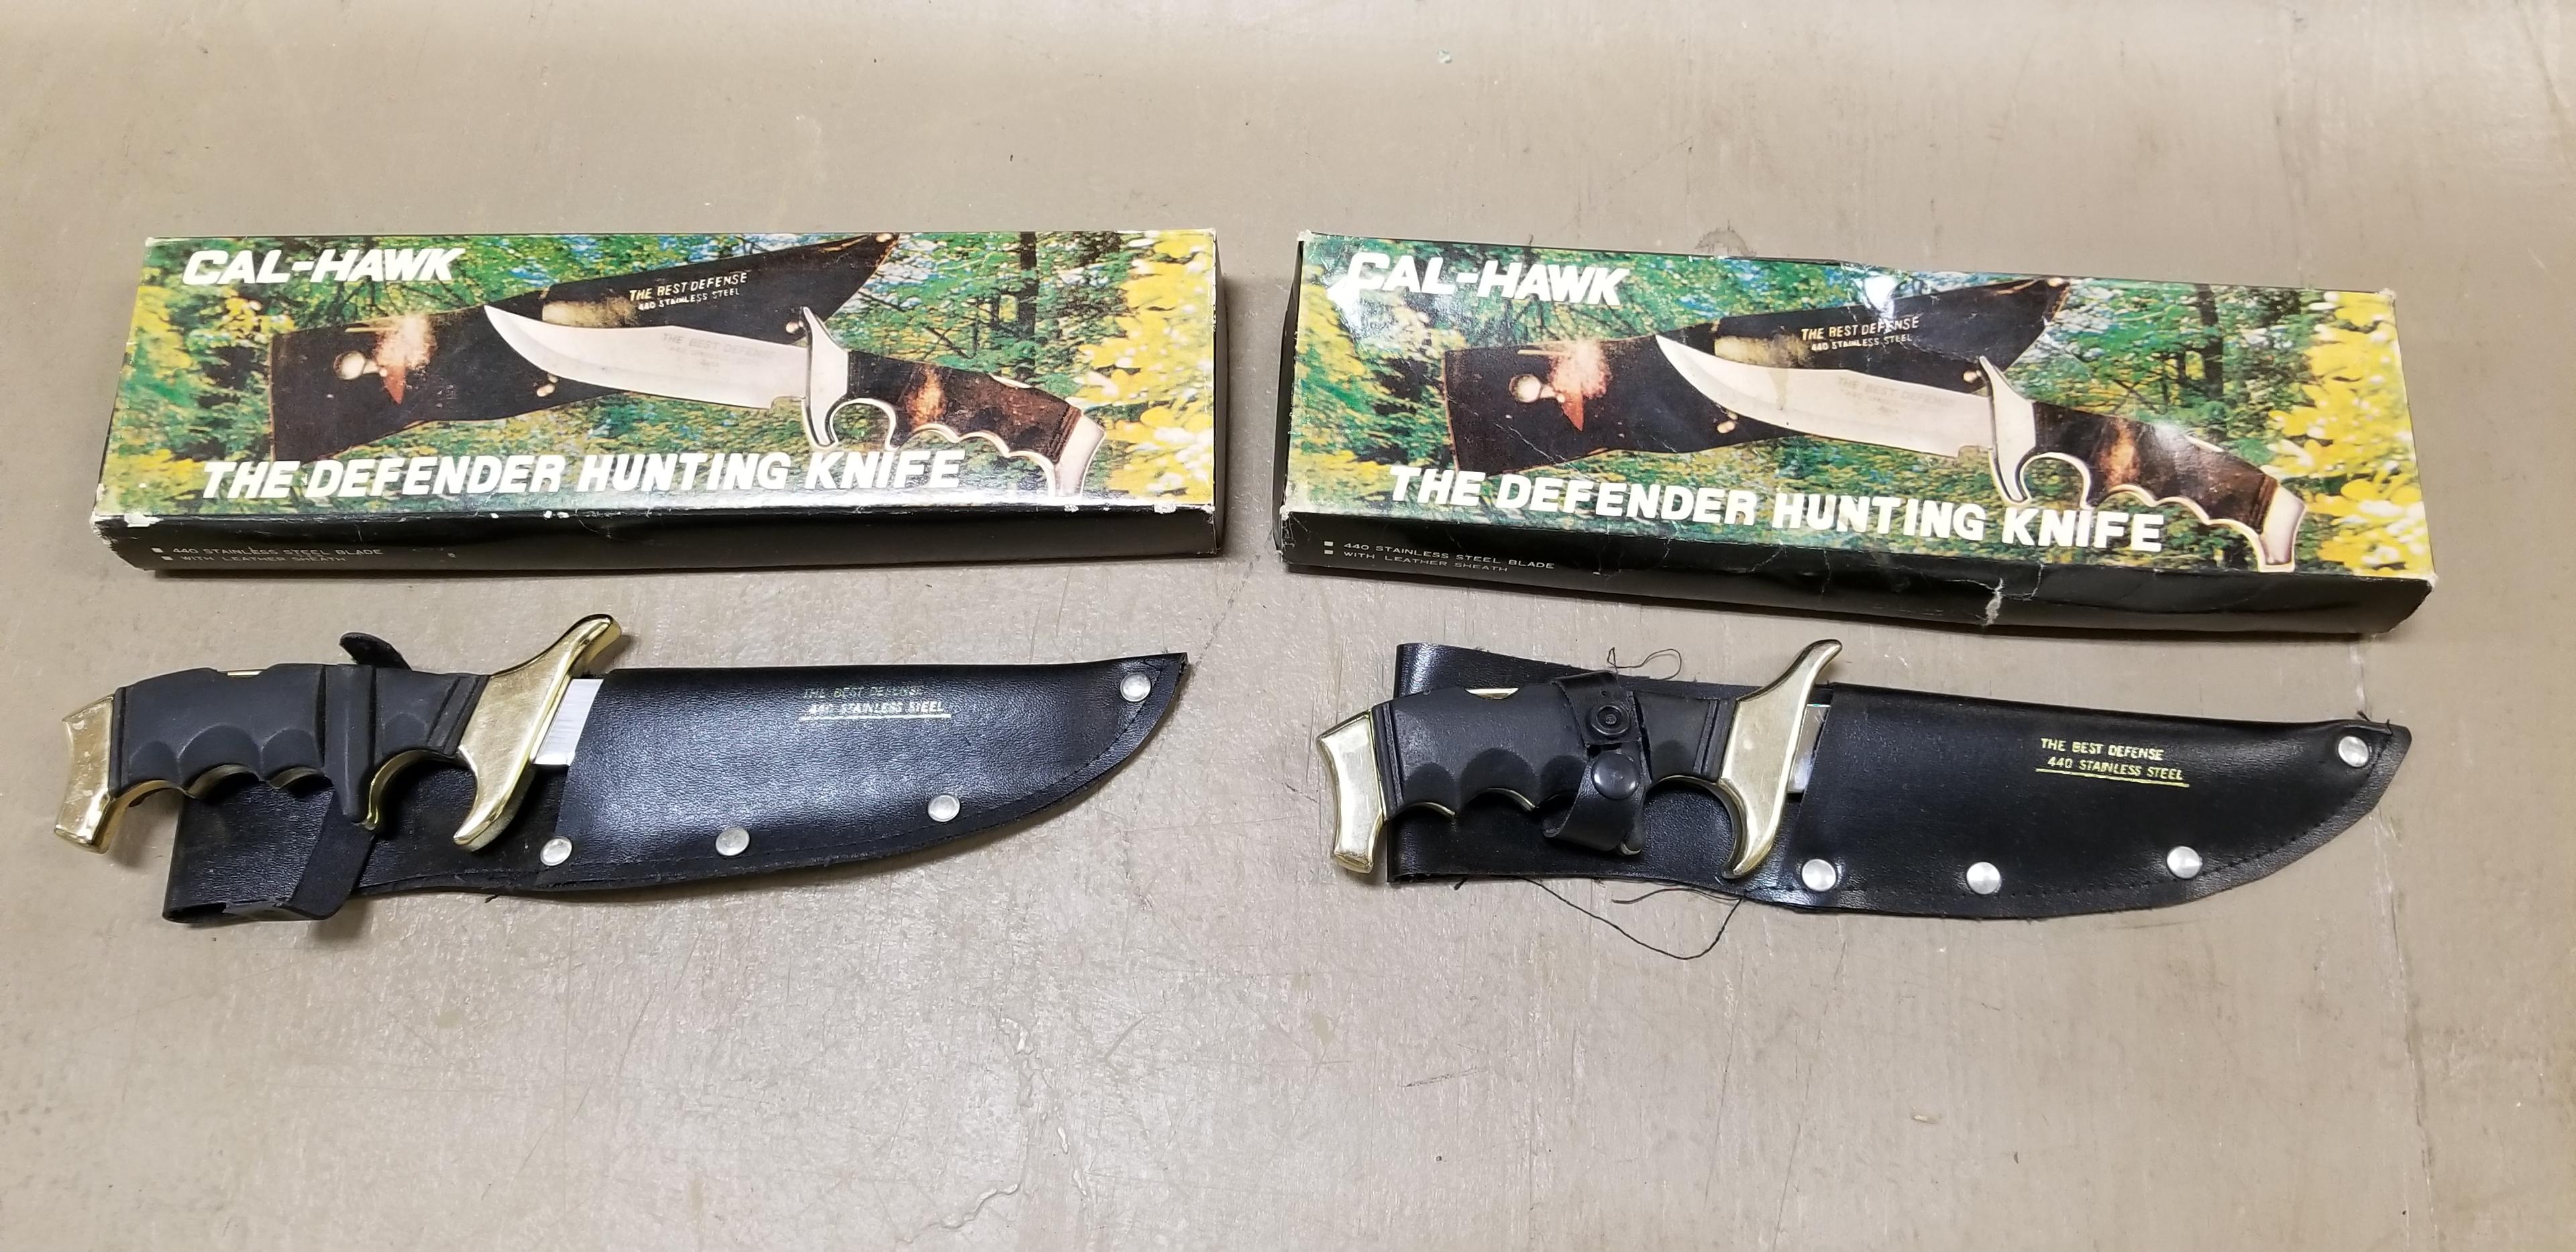 (2) CAL-HAWK DEFENDER HUNTING KNIVES - NIB